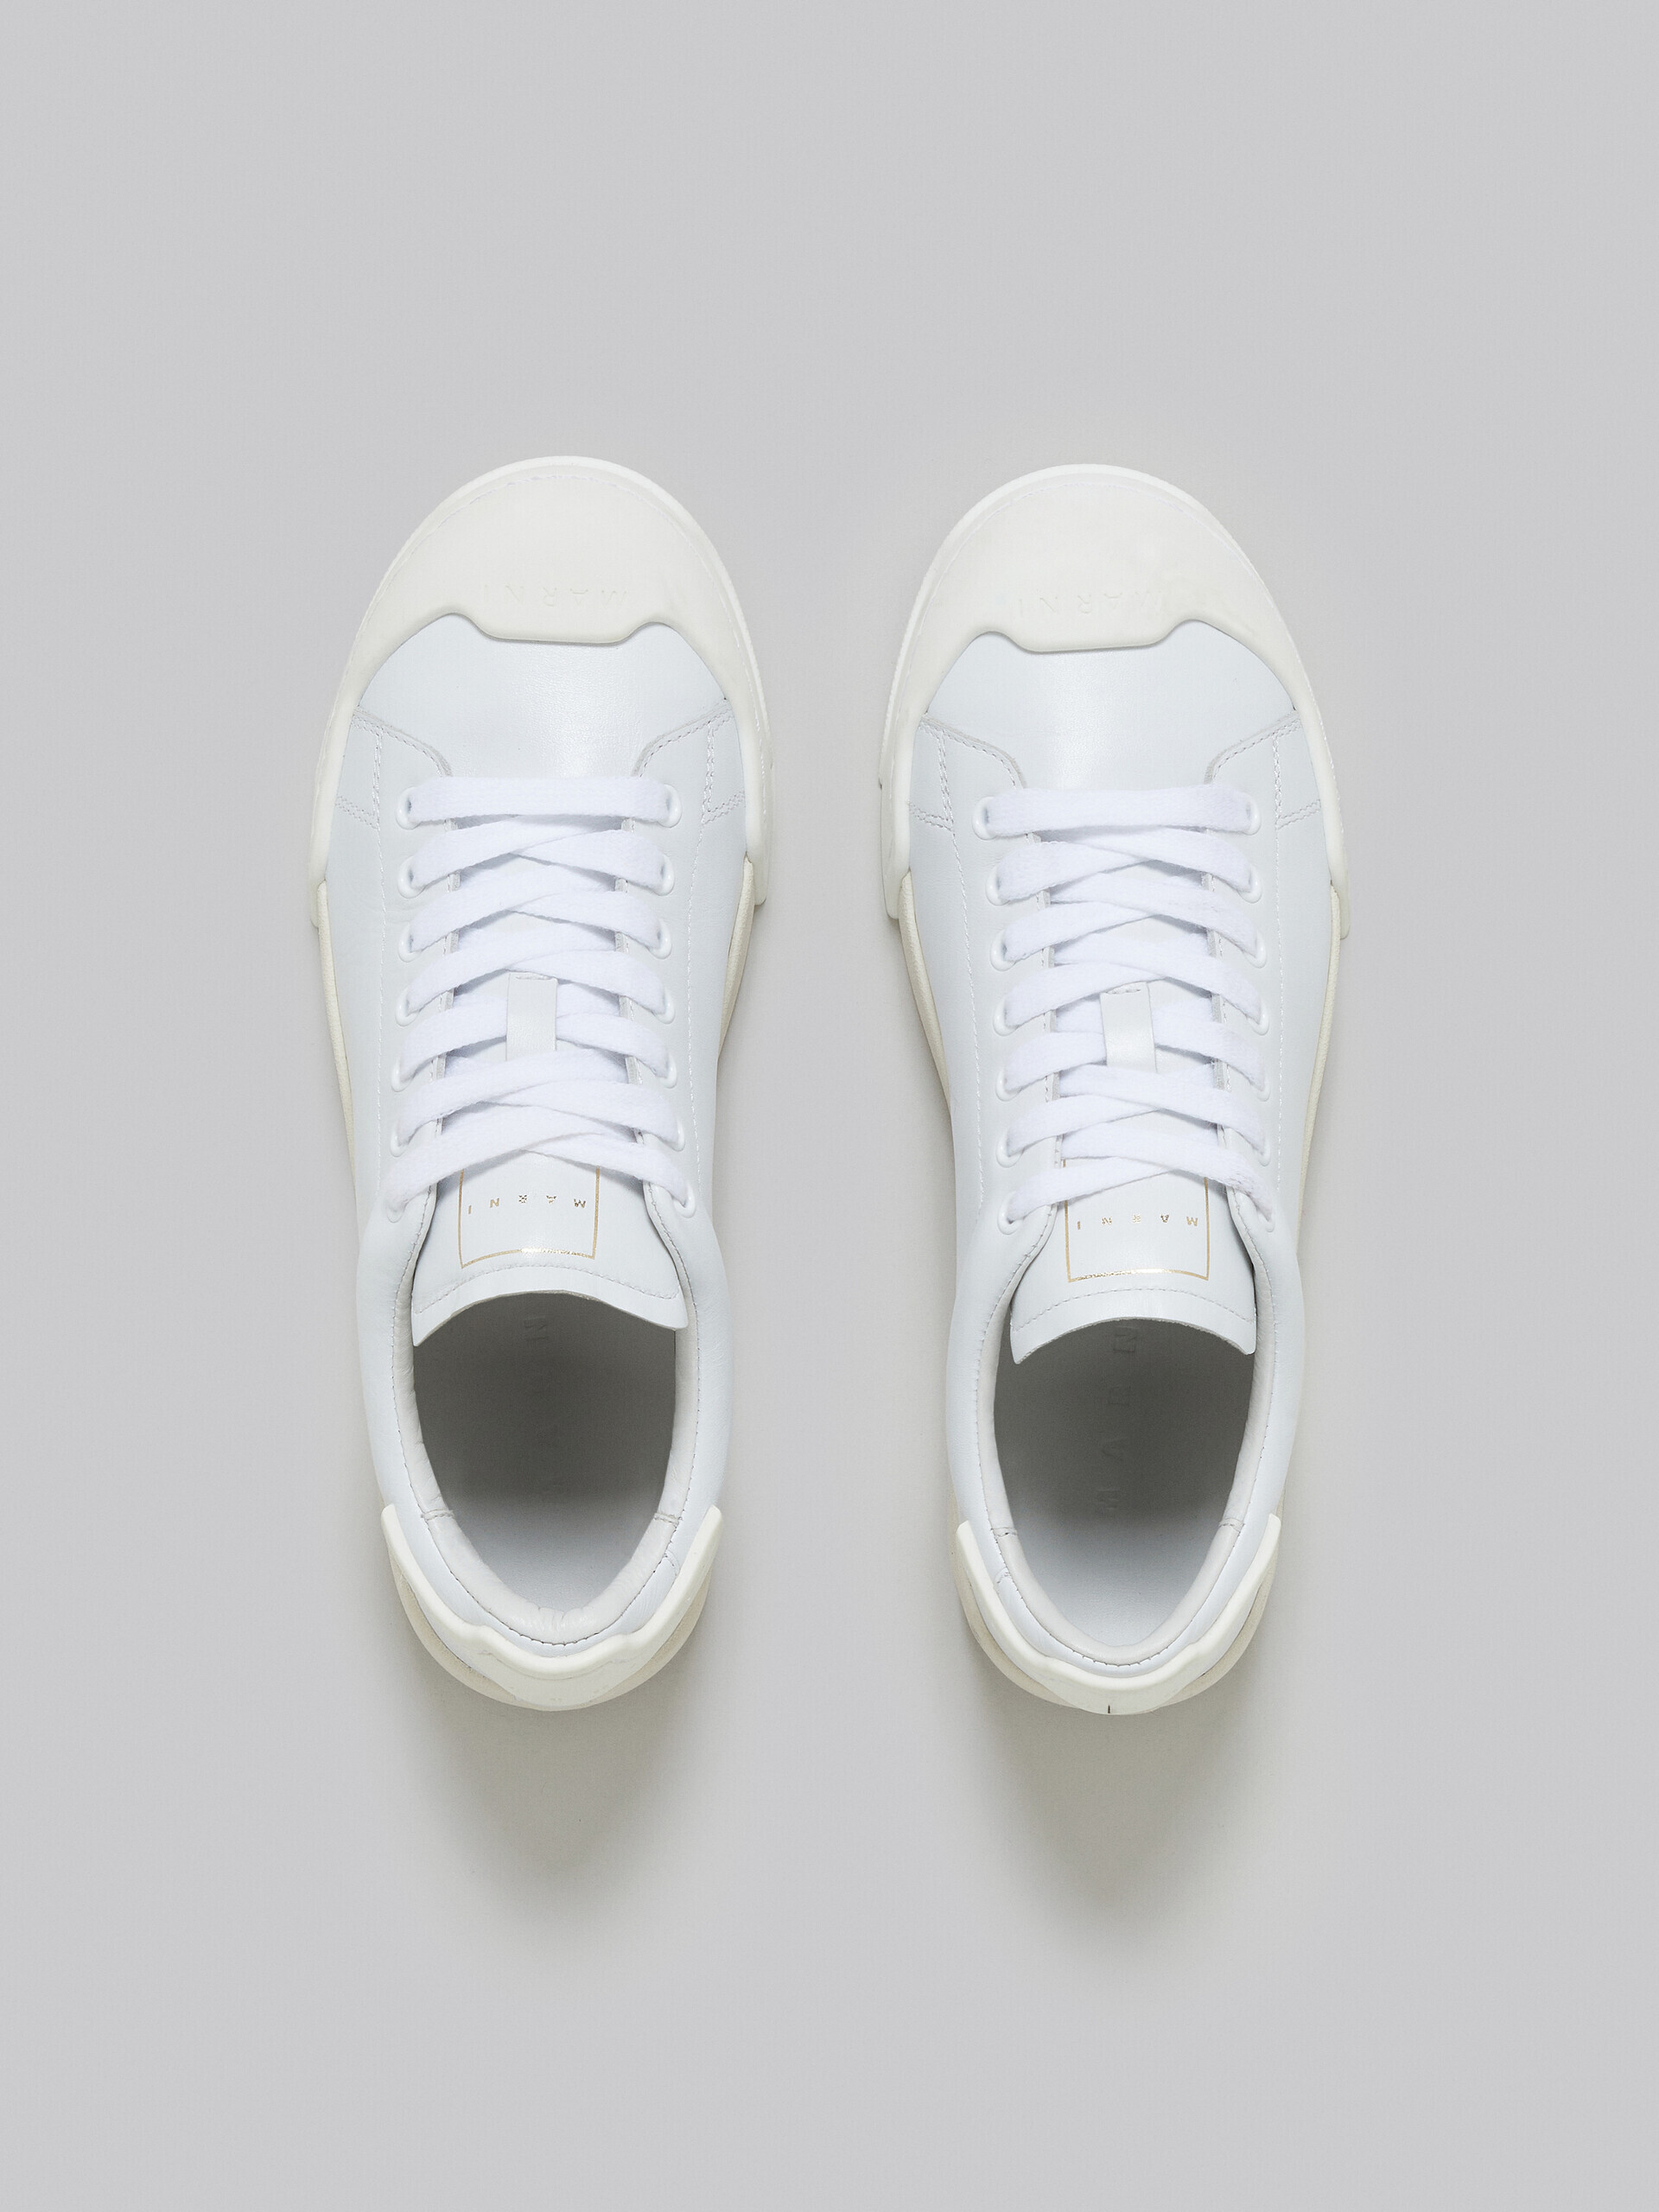 Sneaker Dada Bumper in pelle bianca - Sneakers - Image 4